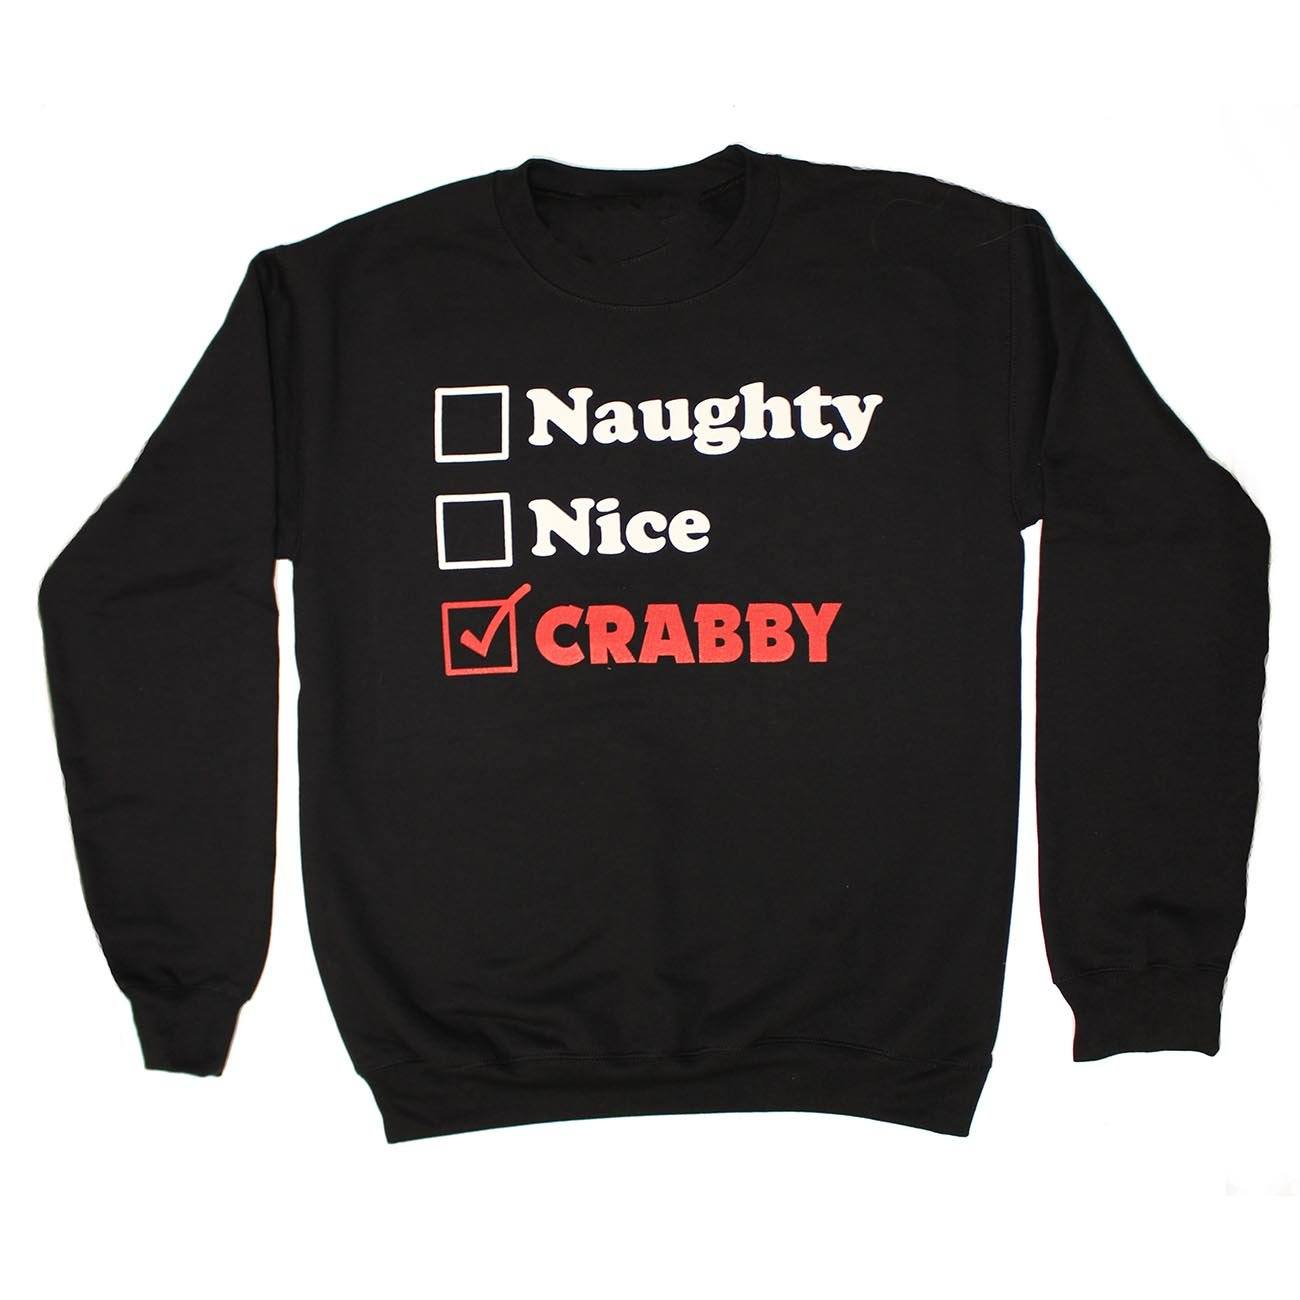 Naughty, Nice, Crabby (Black) / Crew Sweatshirt - Route One Apparel